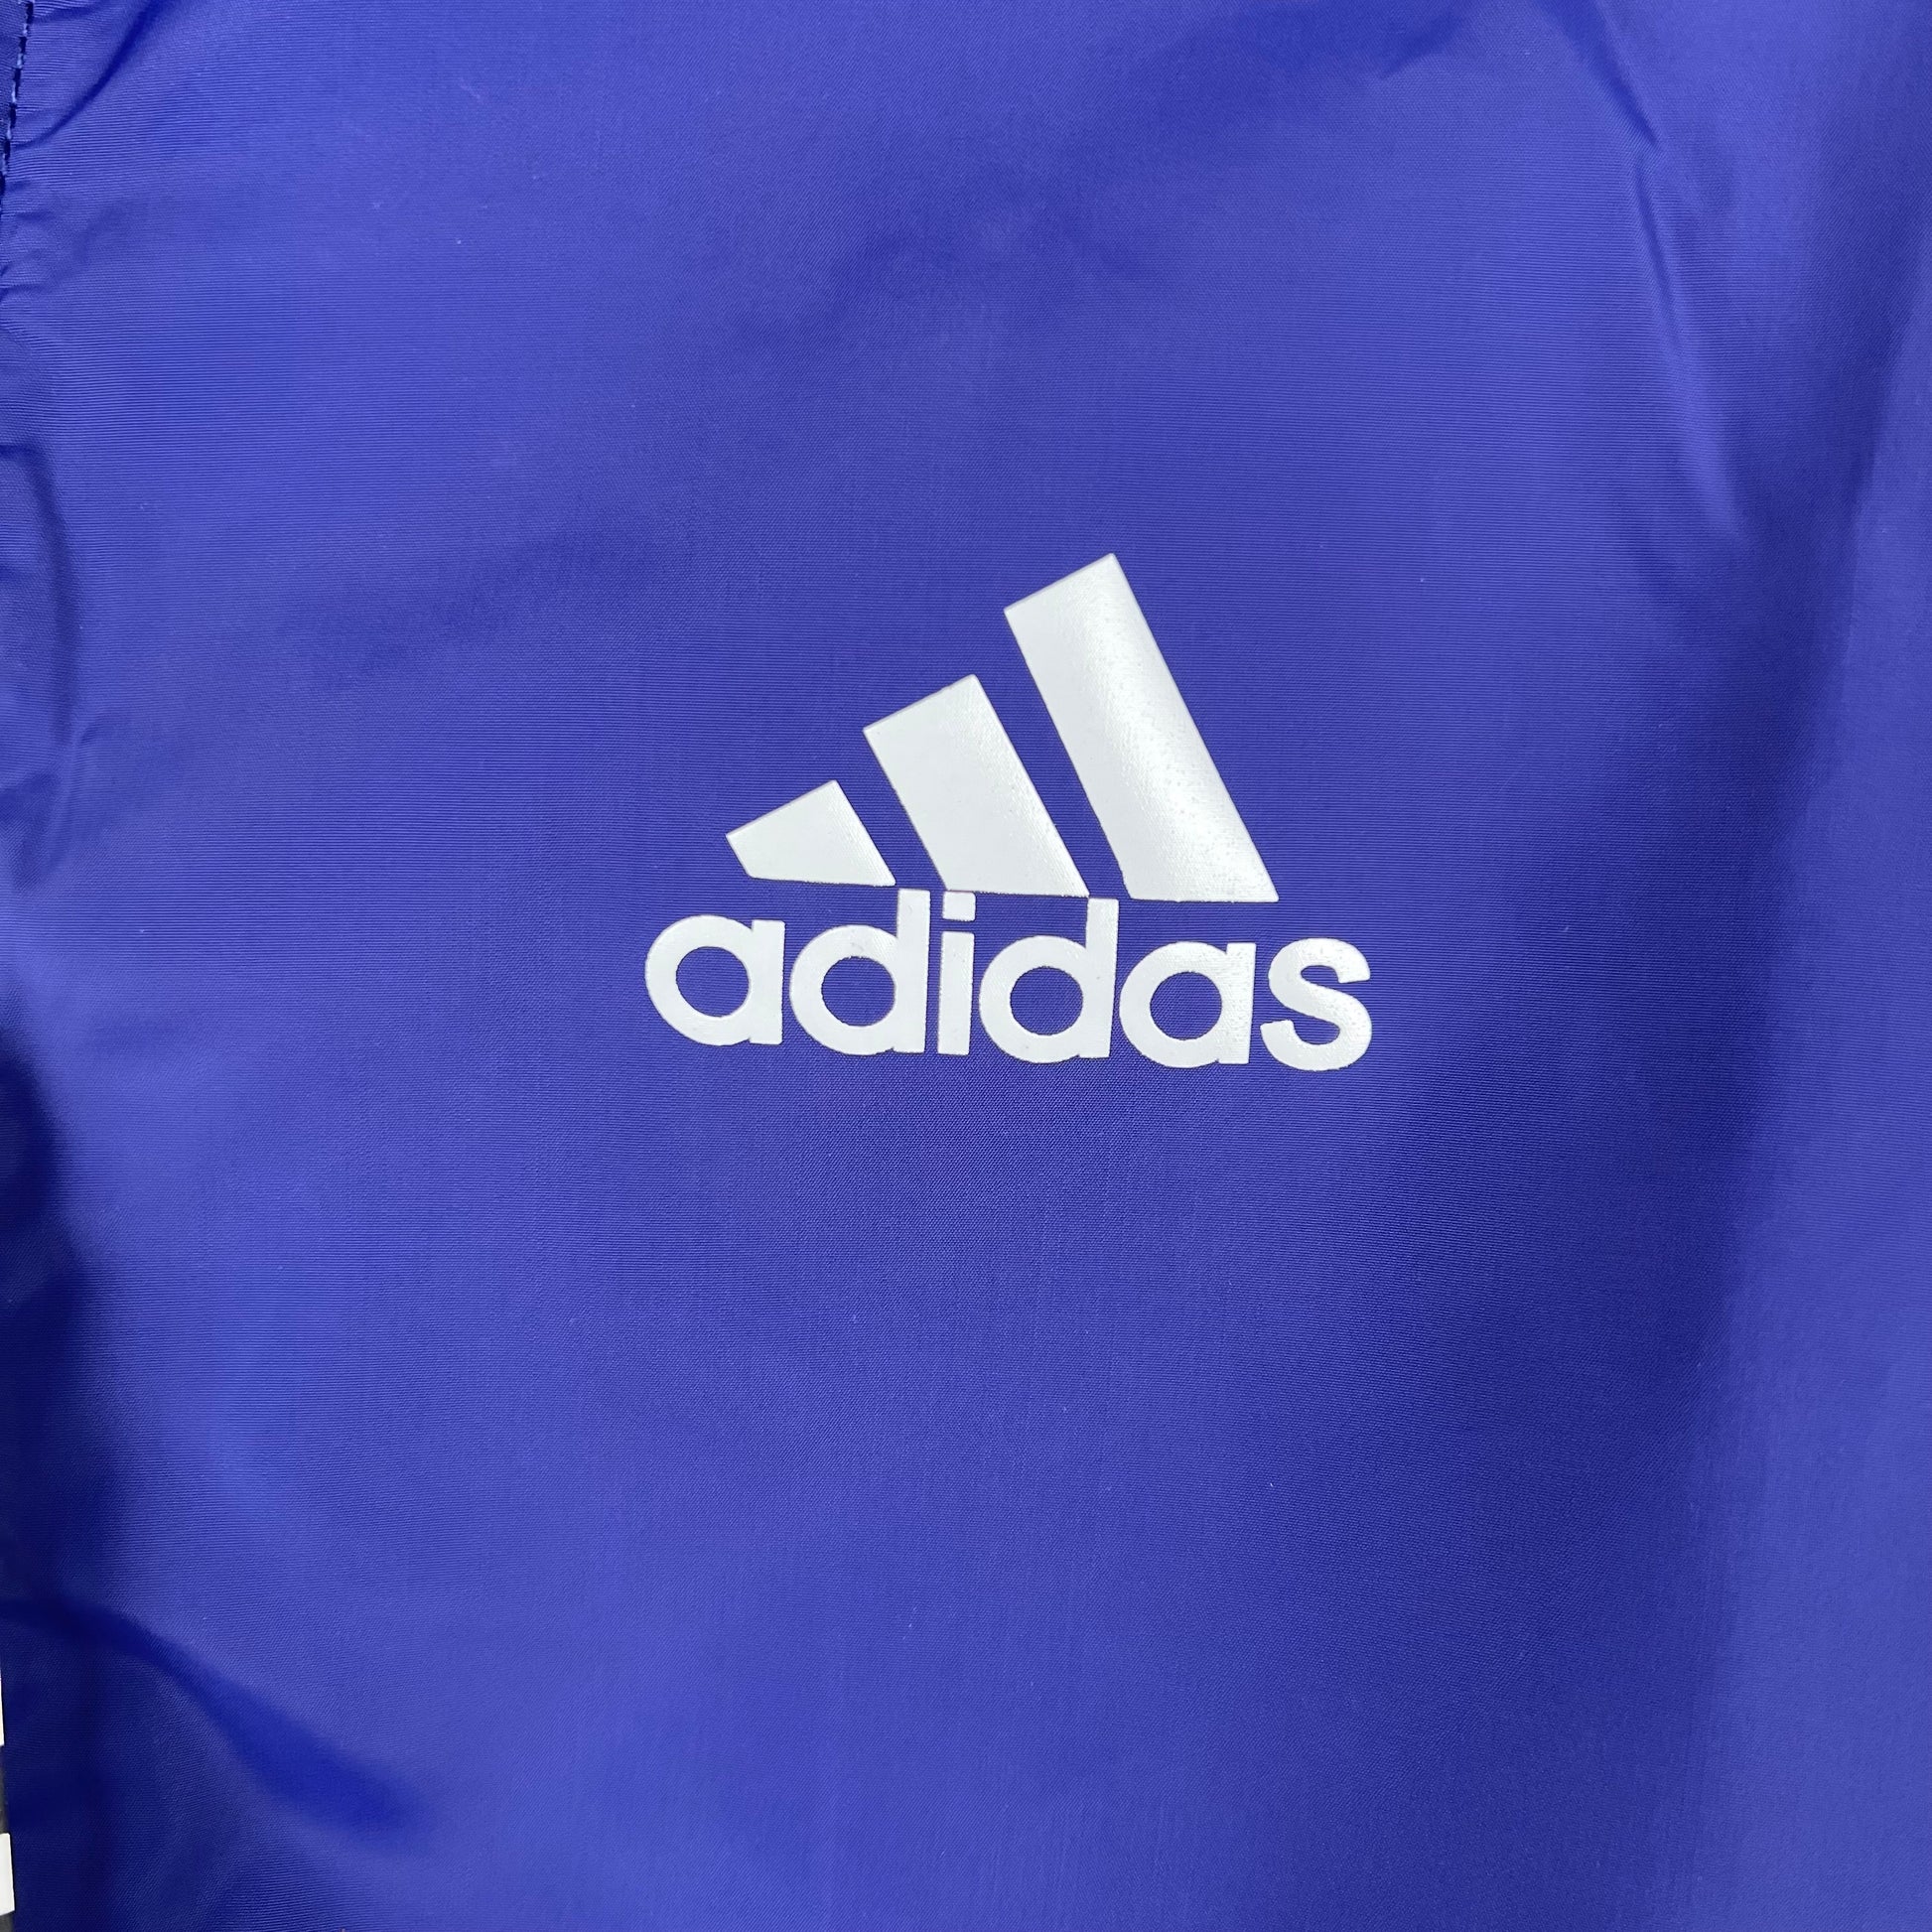 Adidas Windbreaker Jacket